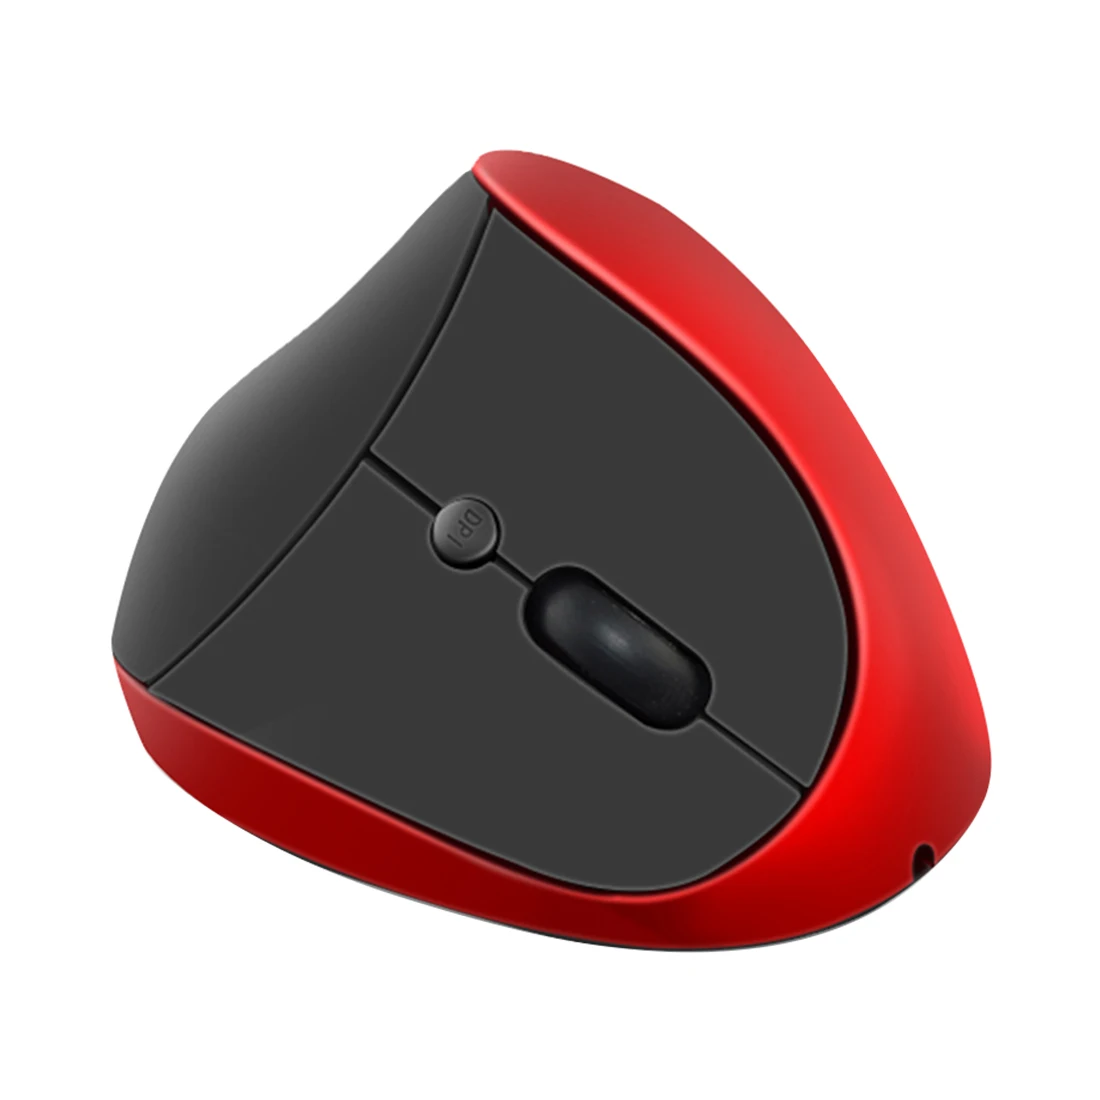 Беспроводная мышь dell, dpi2000. Мышь 2е mf2020 WL Black and Red. Мышка для планшета. Мышь вертикальная беспроводная.